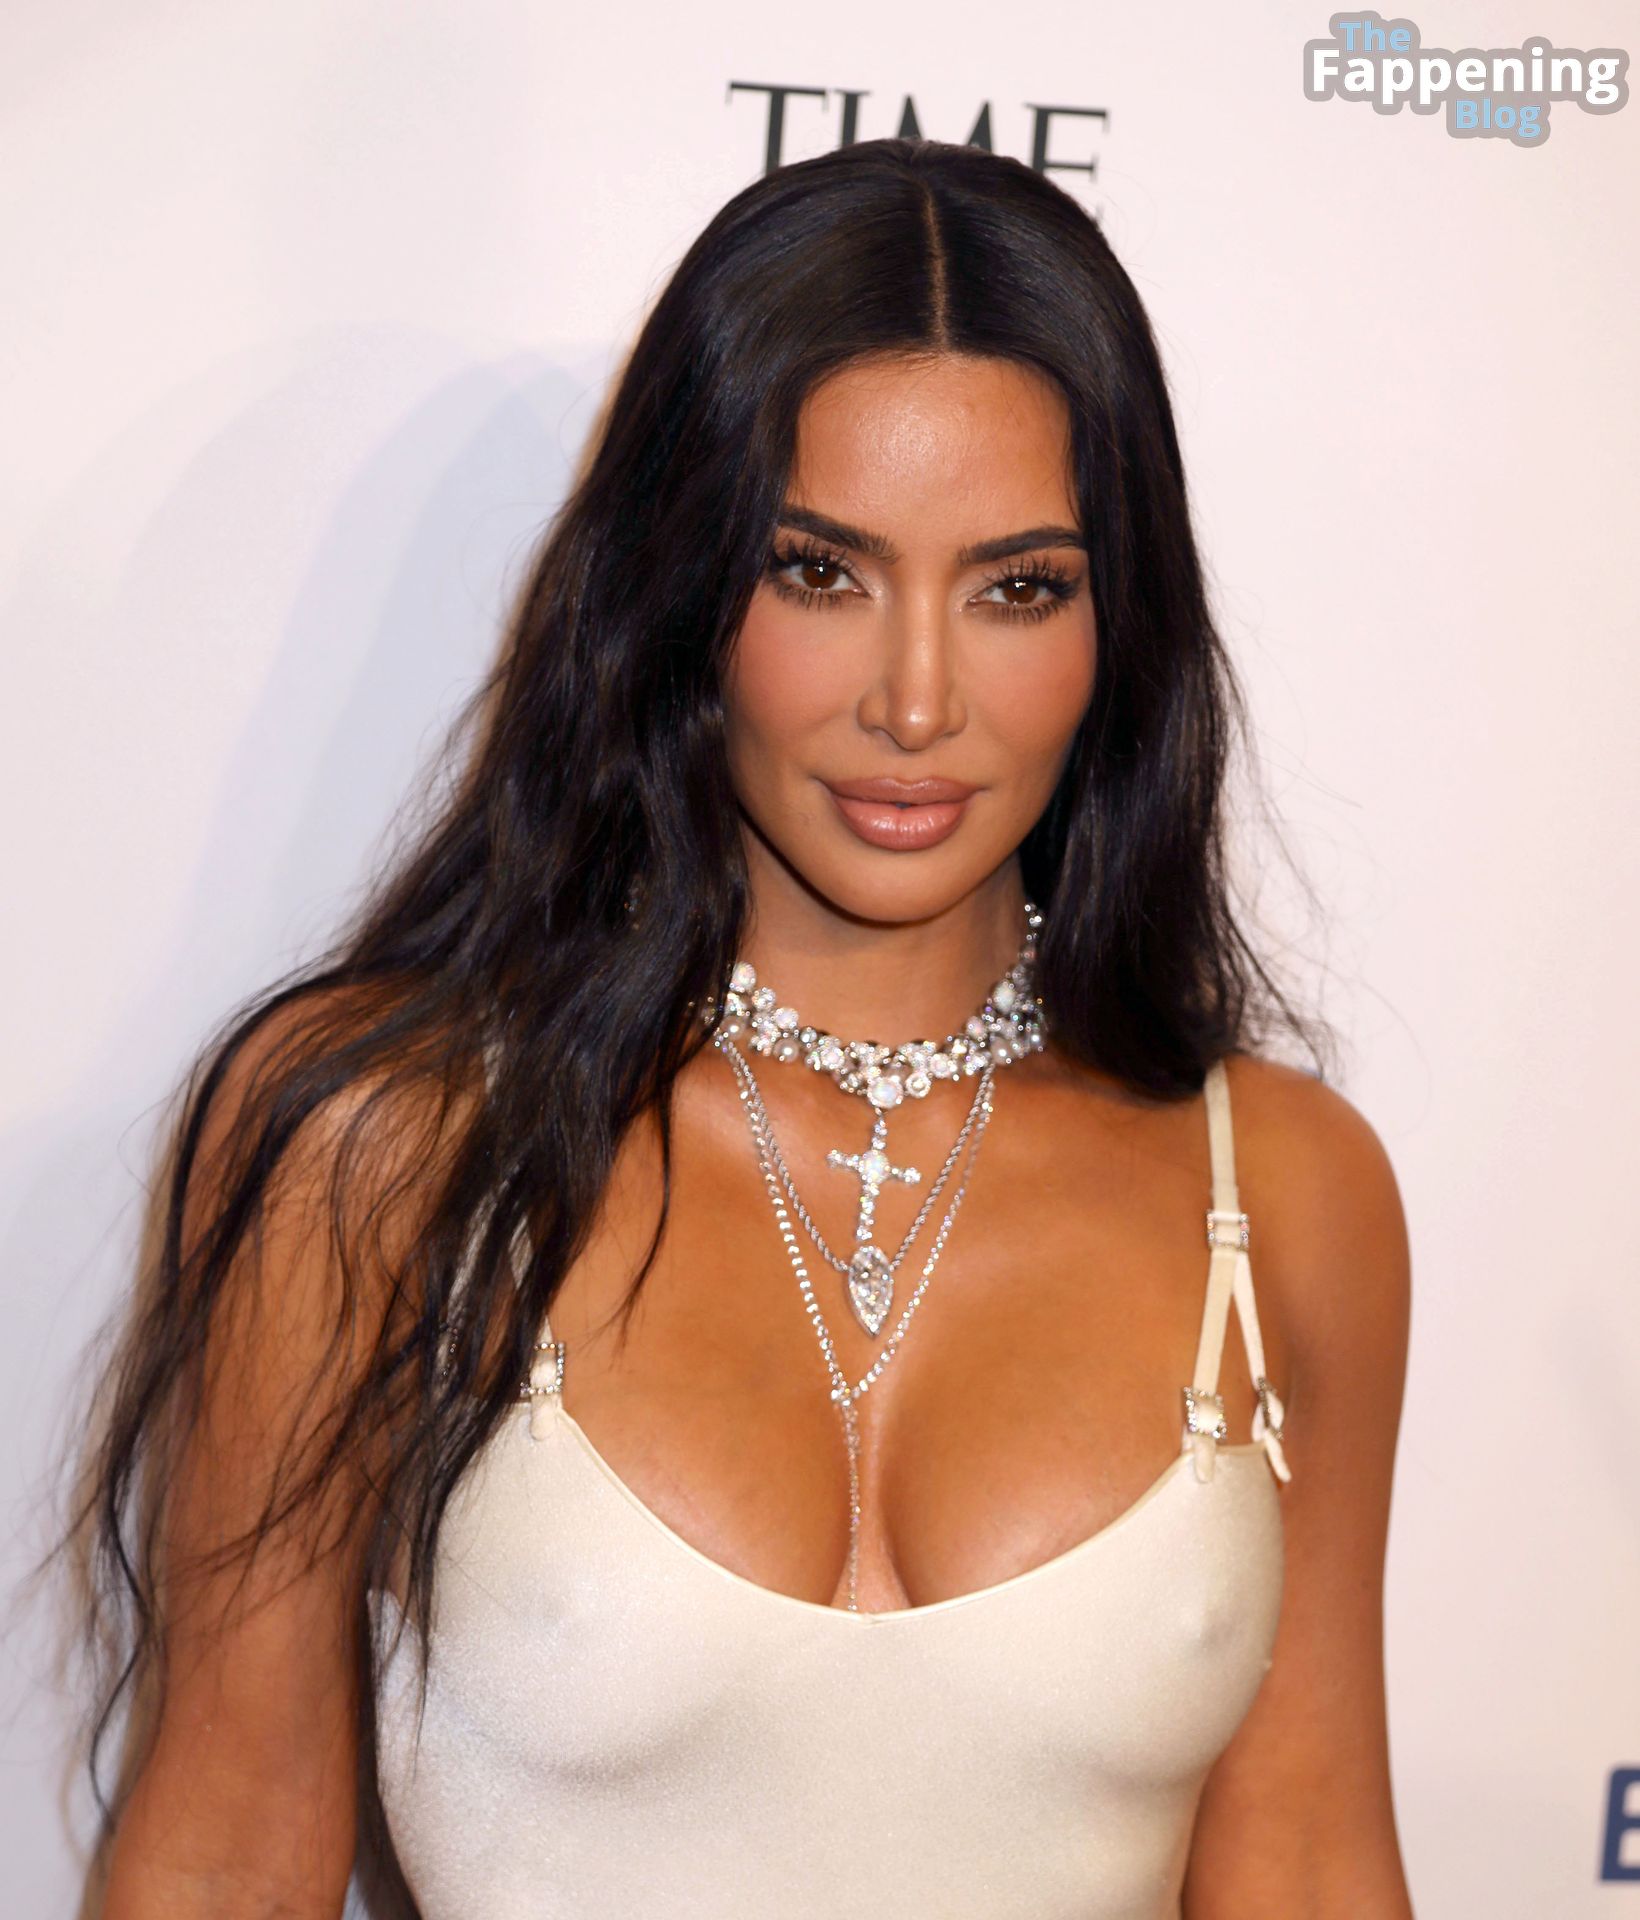 Kim Kardashian Looks Hot at the 2023 TIME100 Gala (125 New Photos)